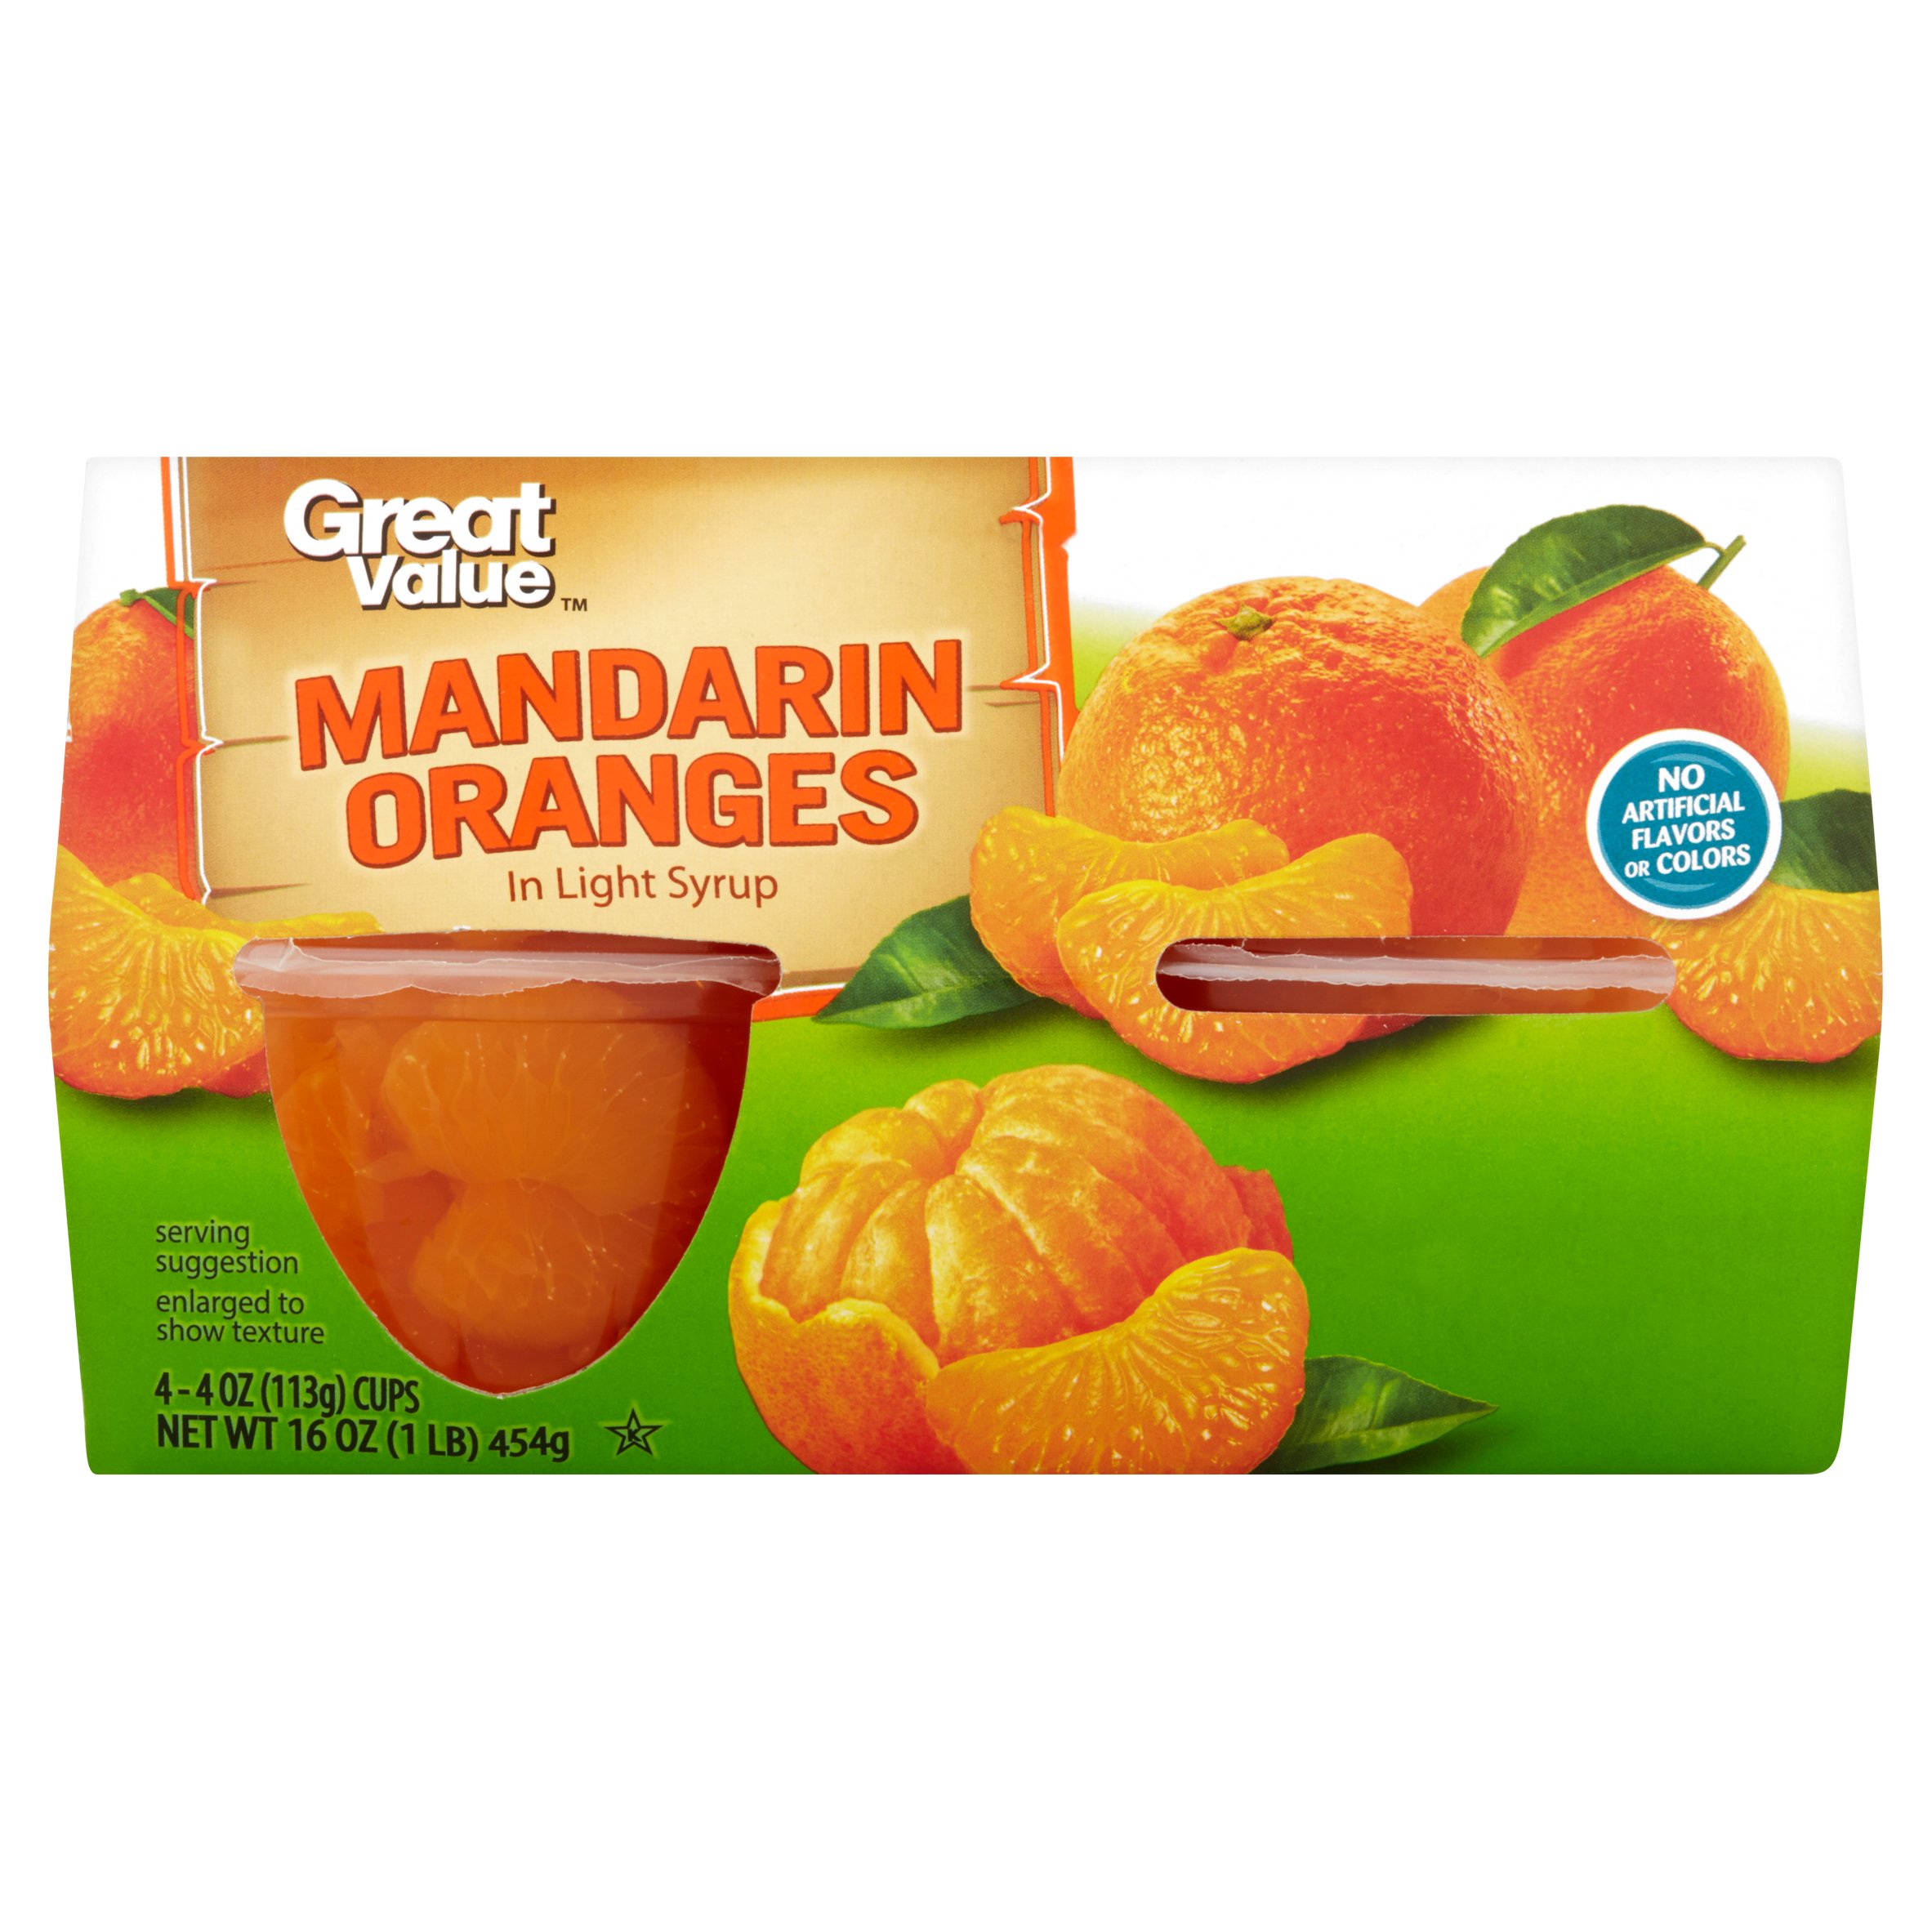 Great Value Mandarin Oranges in Light Syrup, 4 Oz, 4 Count Image